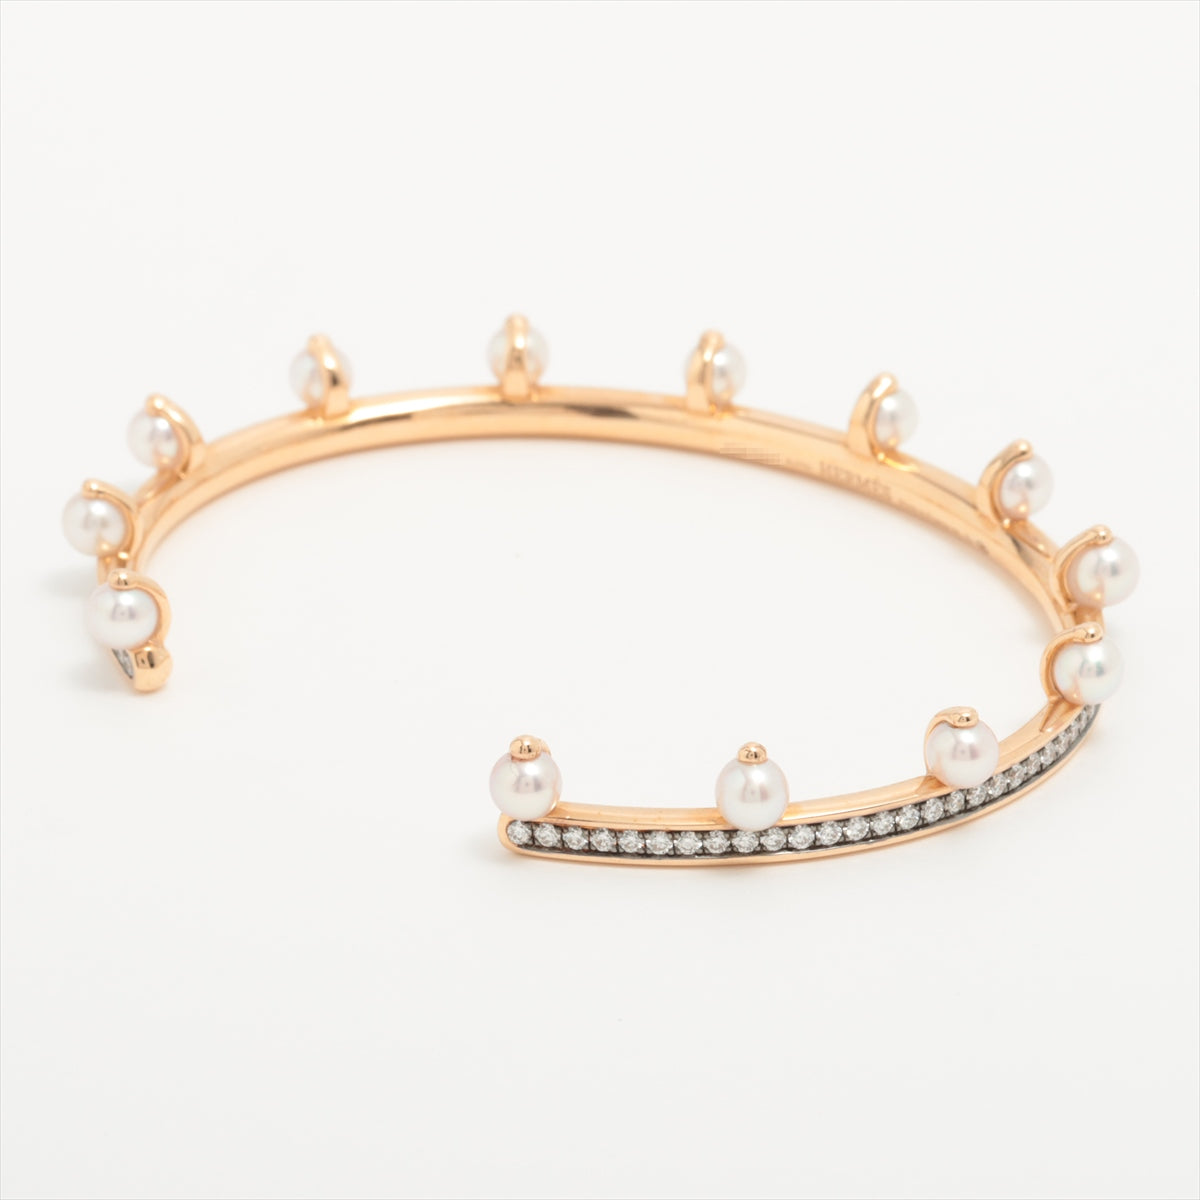 Hermès Chandra Pearl diamond Bracelet 750(PG) 15.1g ST